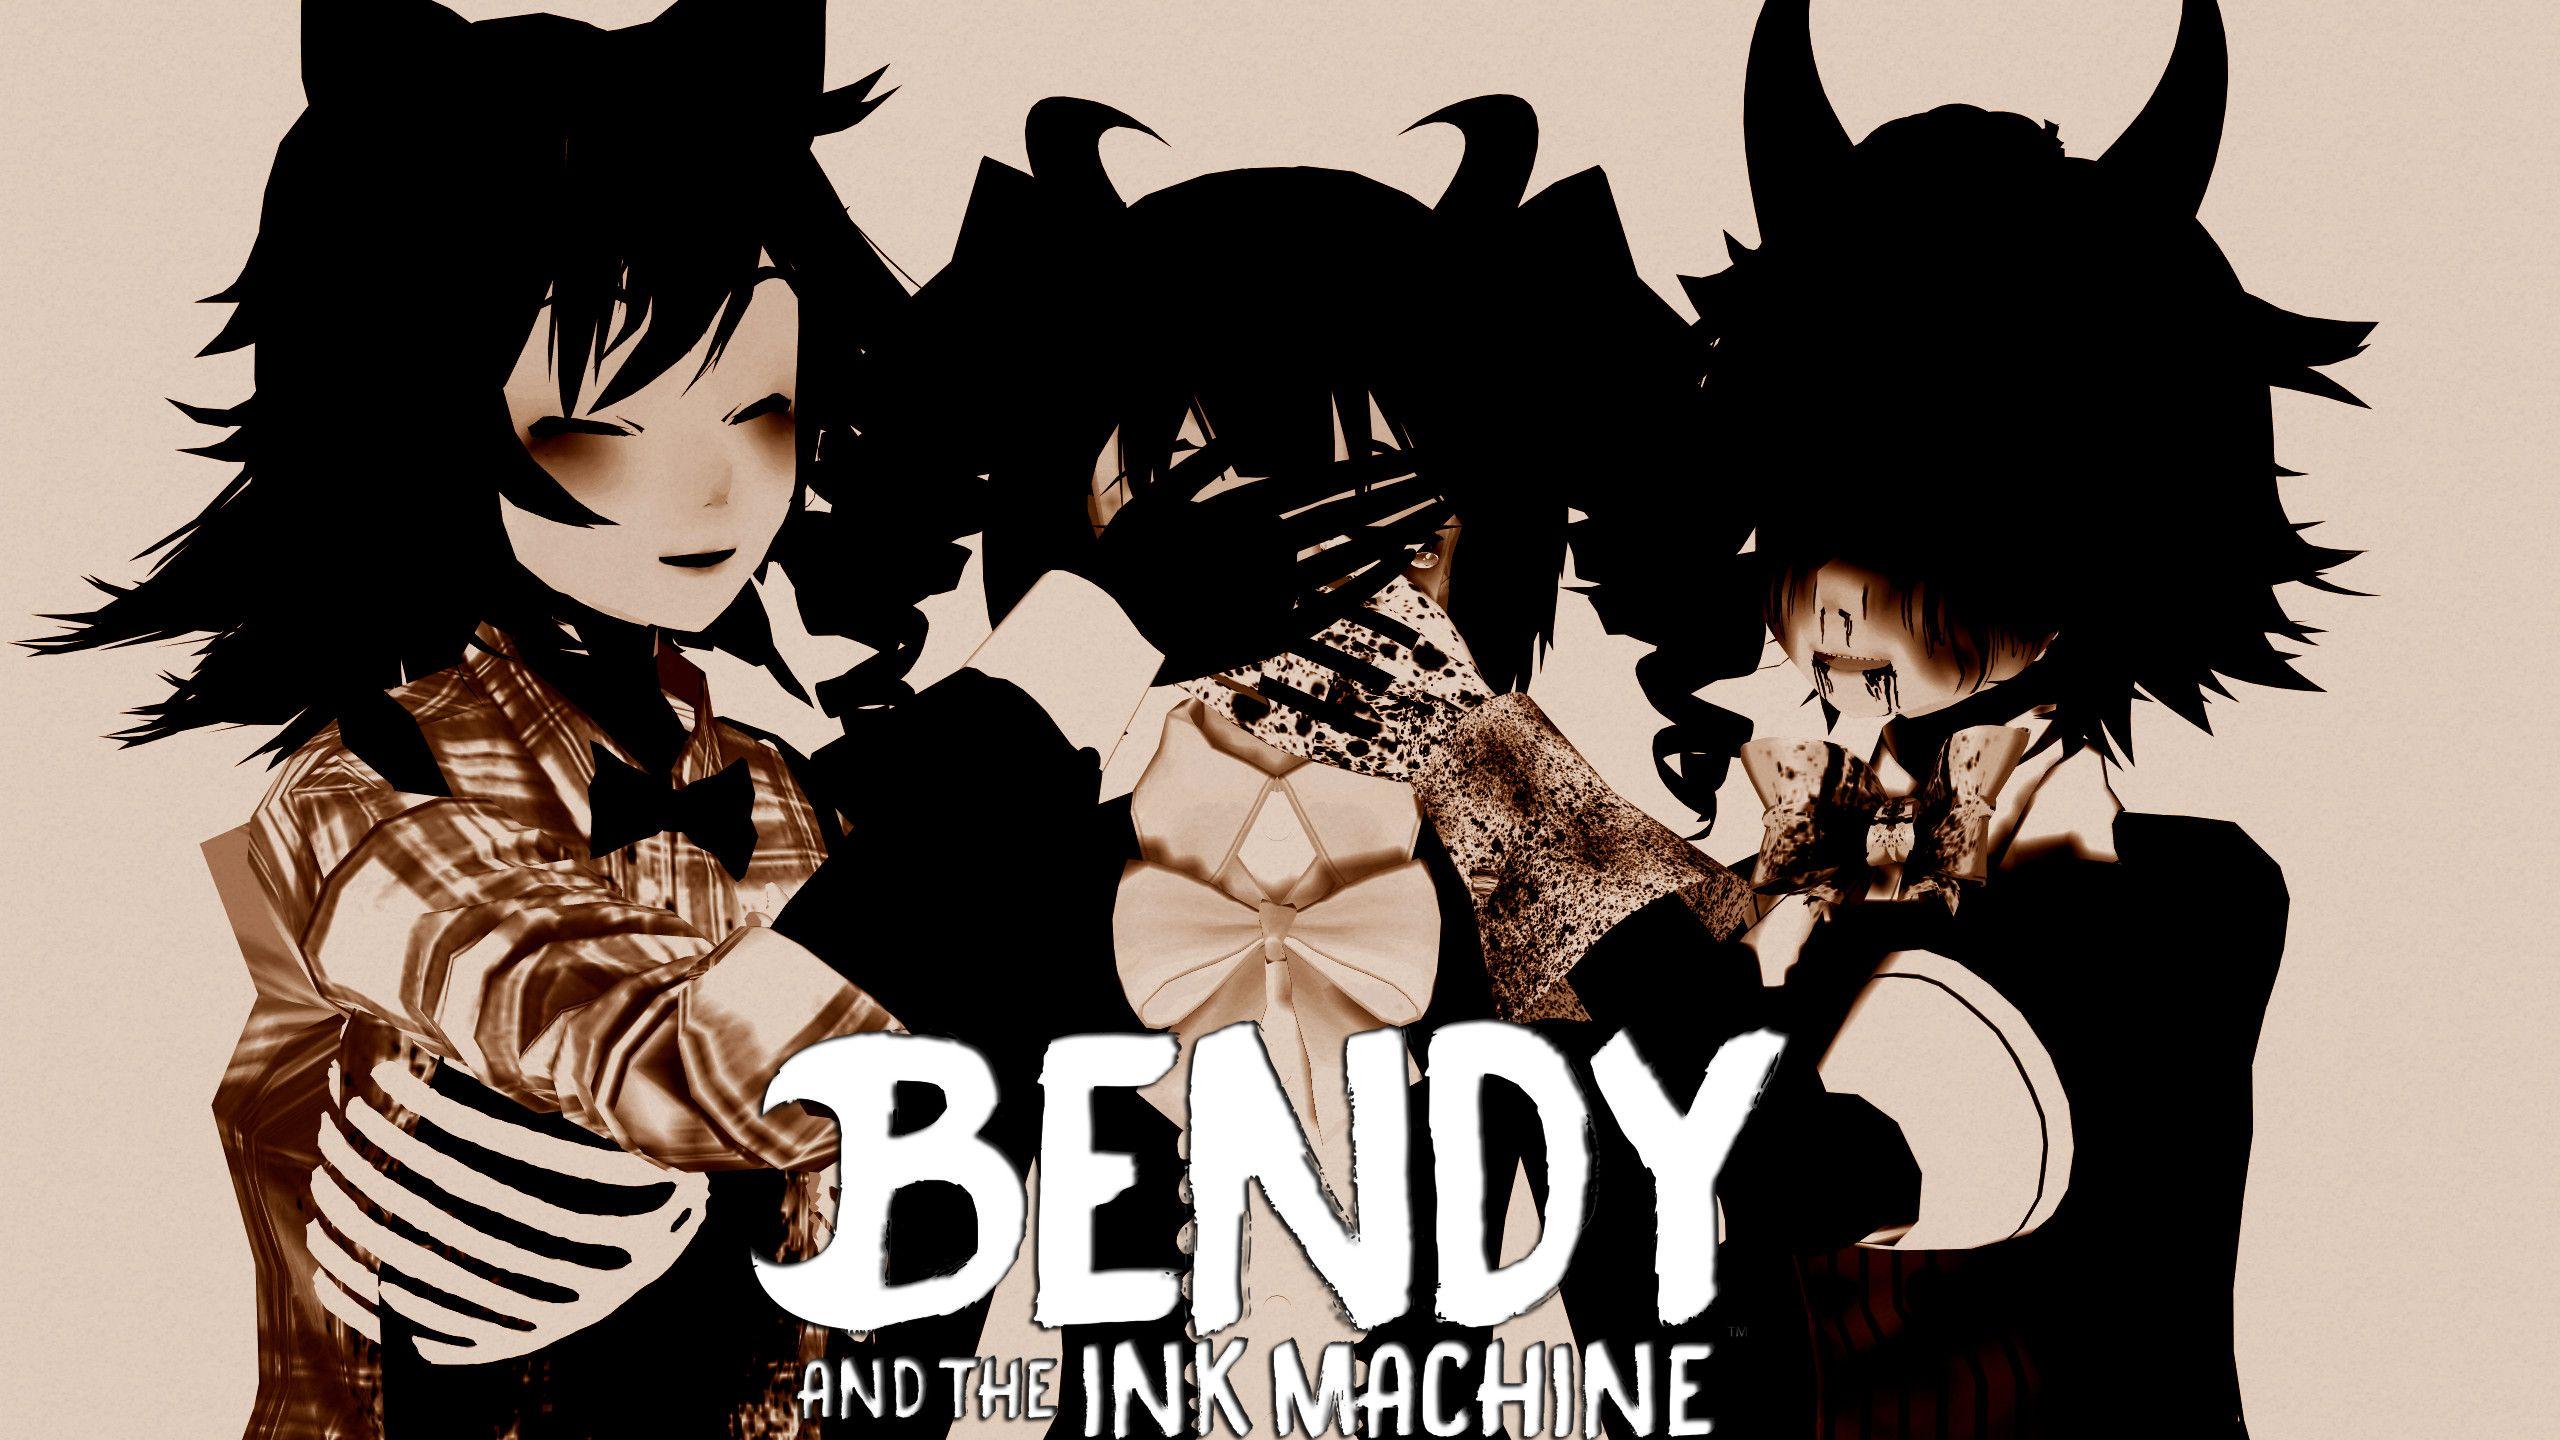 New Bendy And The Ink Machine Wallpaper 2560x1440 Mac WTG200131036